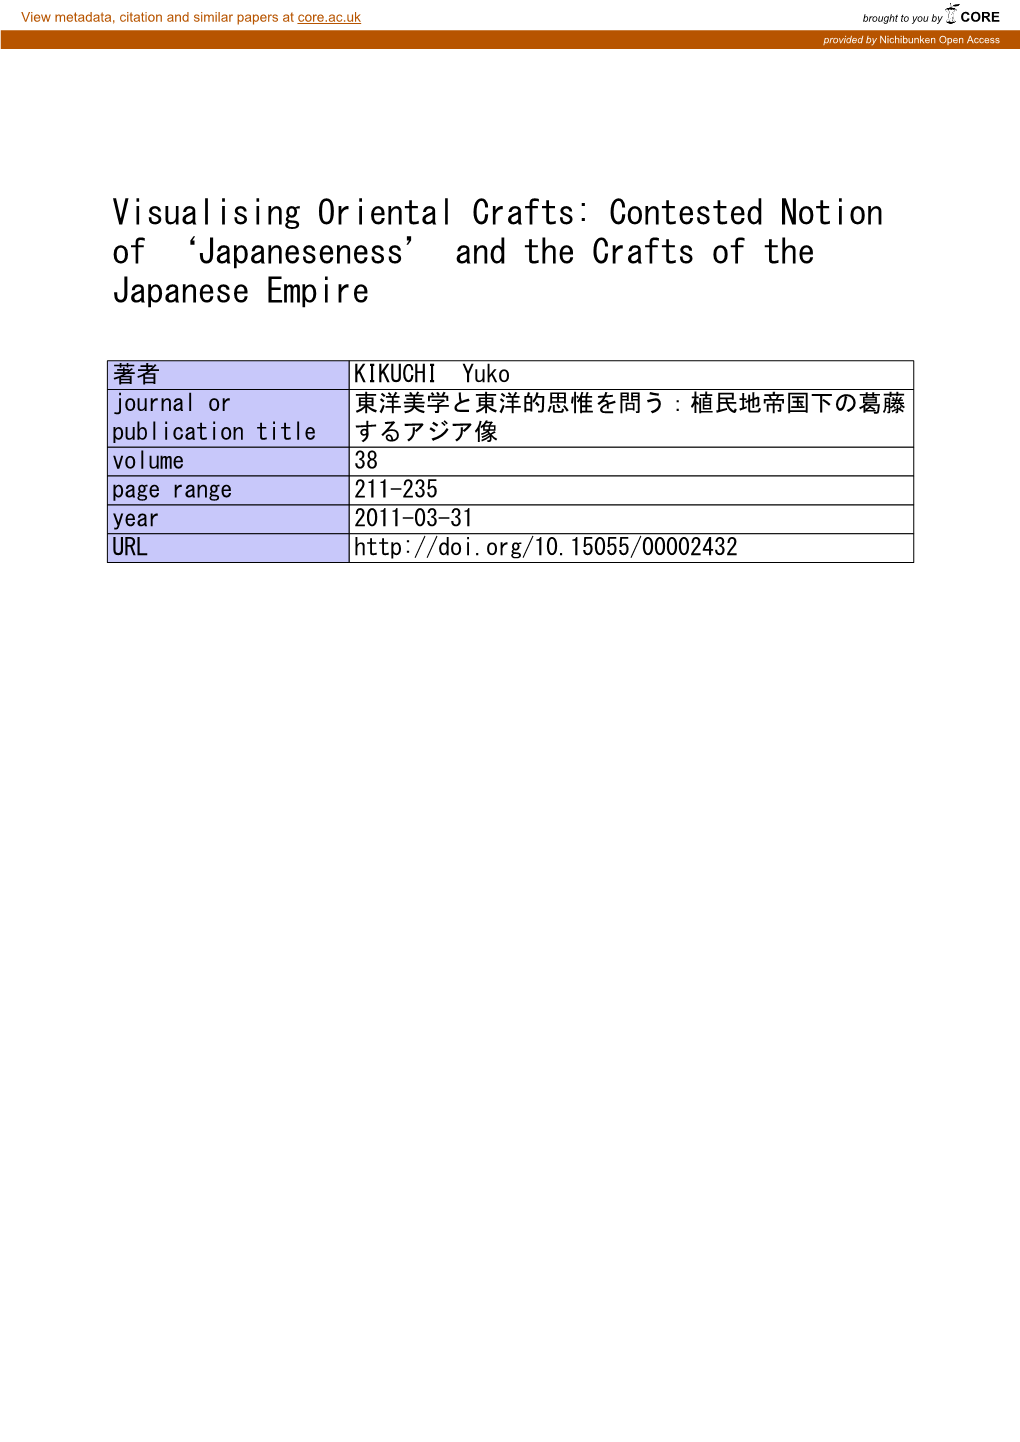 Visualising Oriental Crafts: Contested Notion of 'Japaneseness'